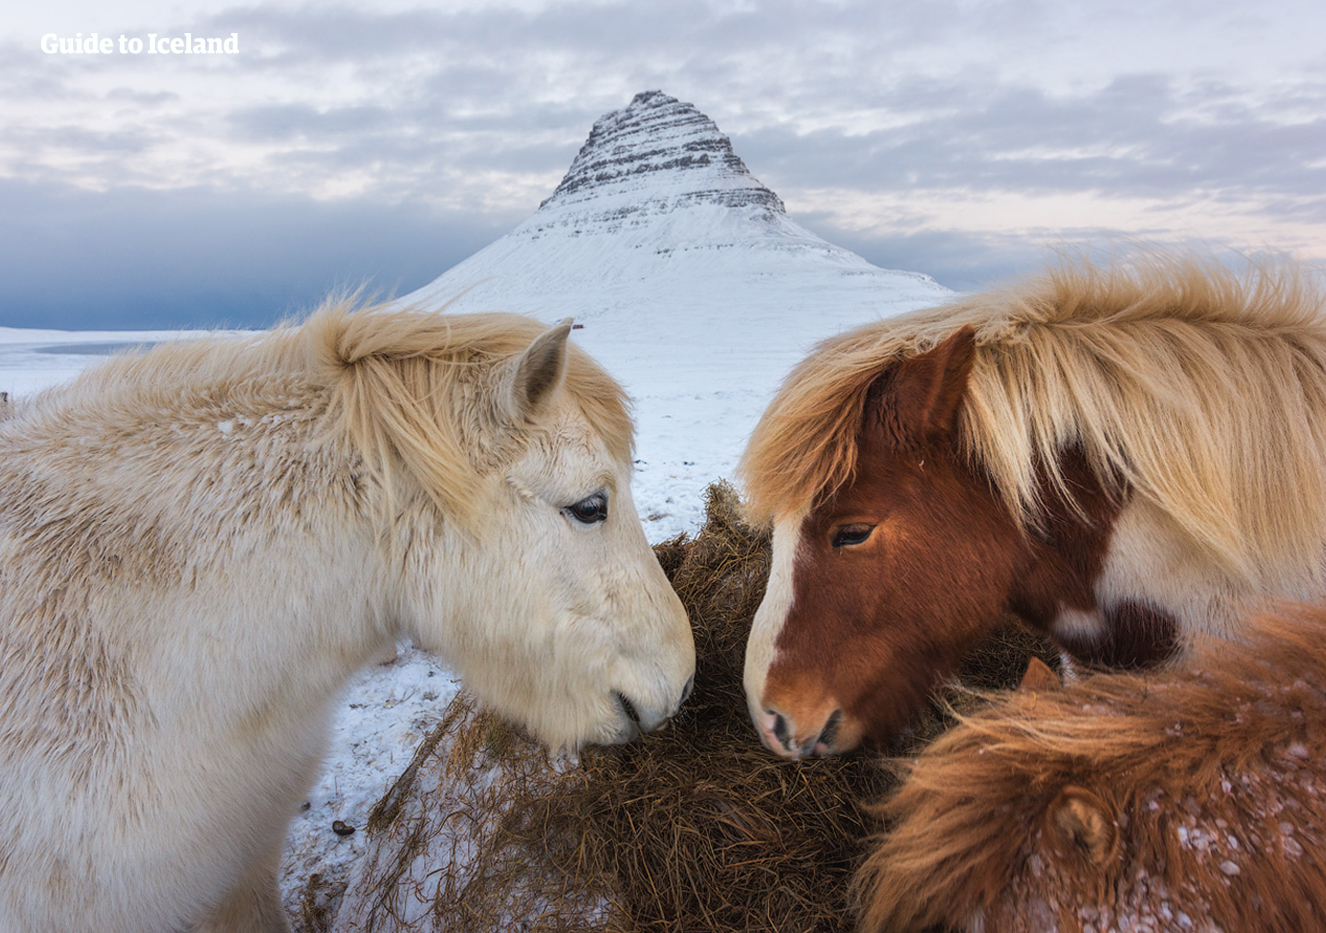 Icelandic horses and the iconic Kirkjufell mountain on the Snæfellsnes Peninsula.